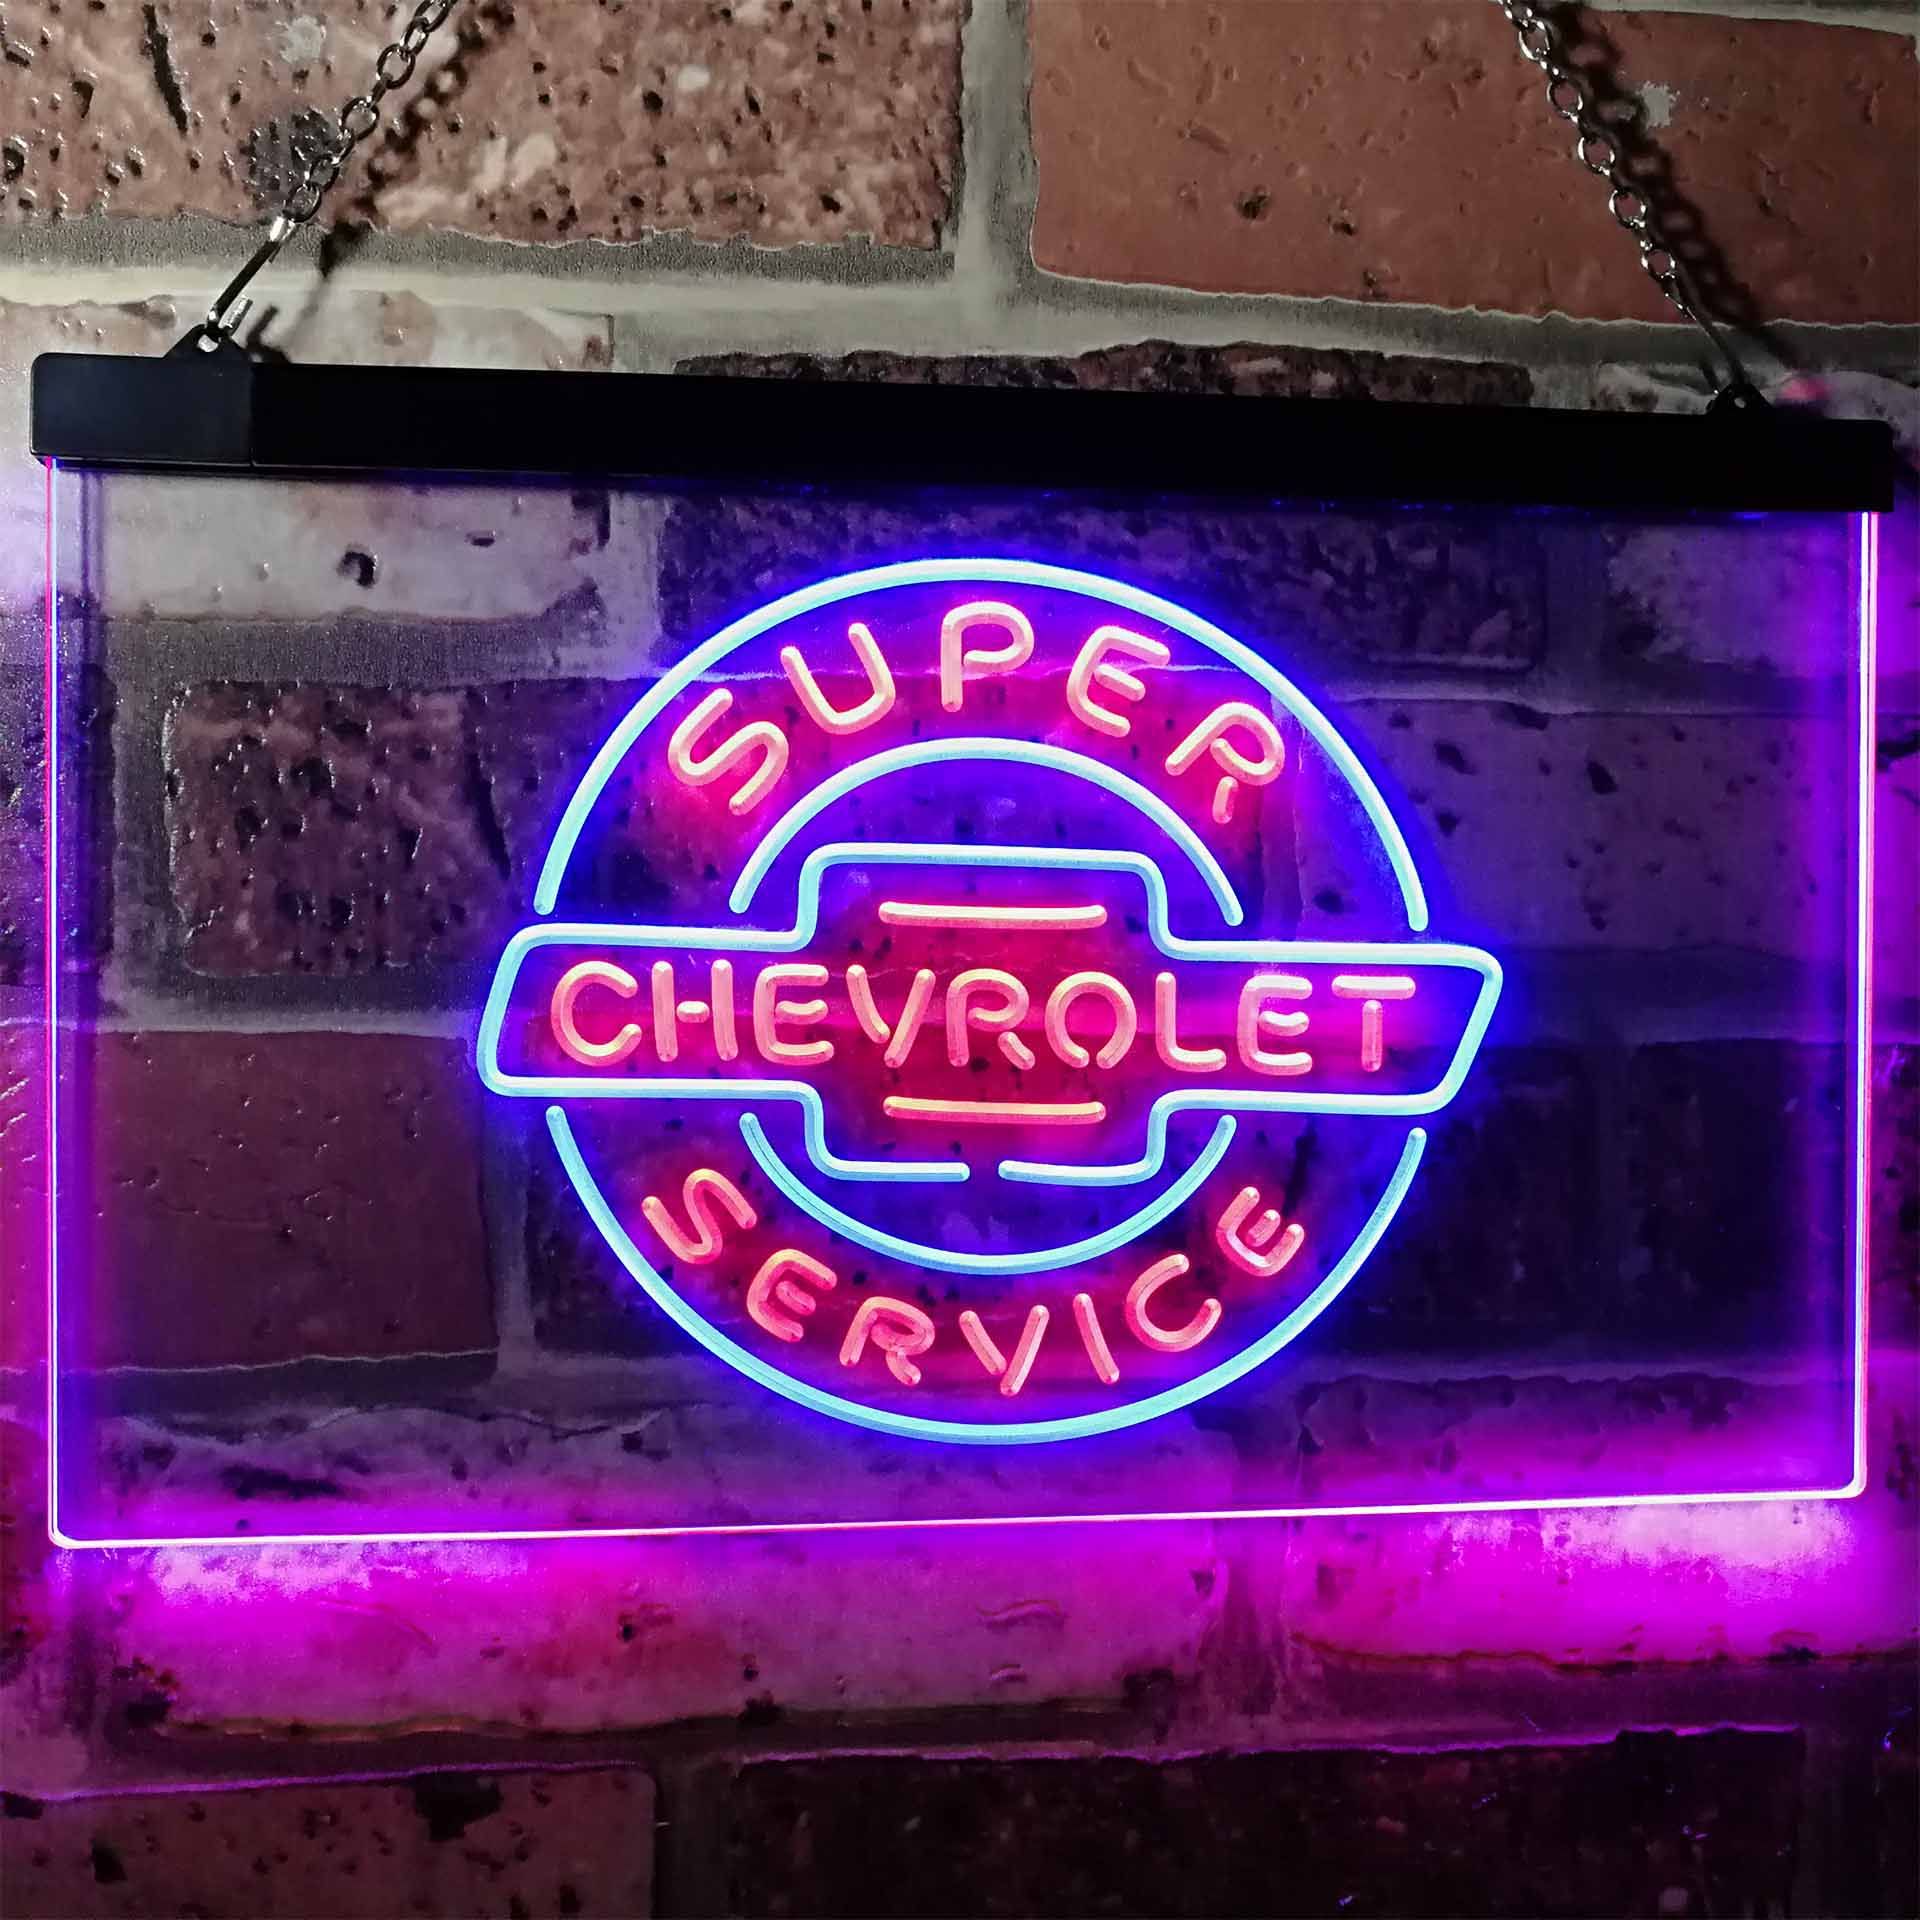 Chevrolet Super Service Dual LED Neon Light Sign